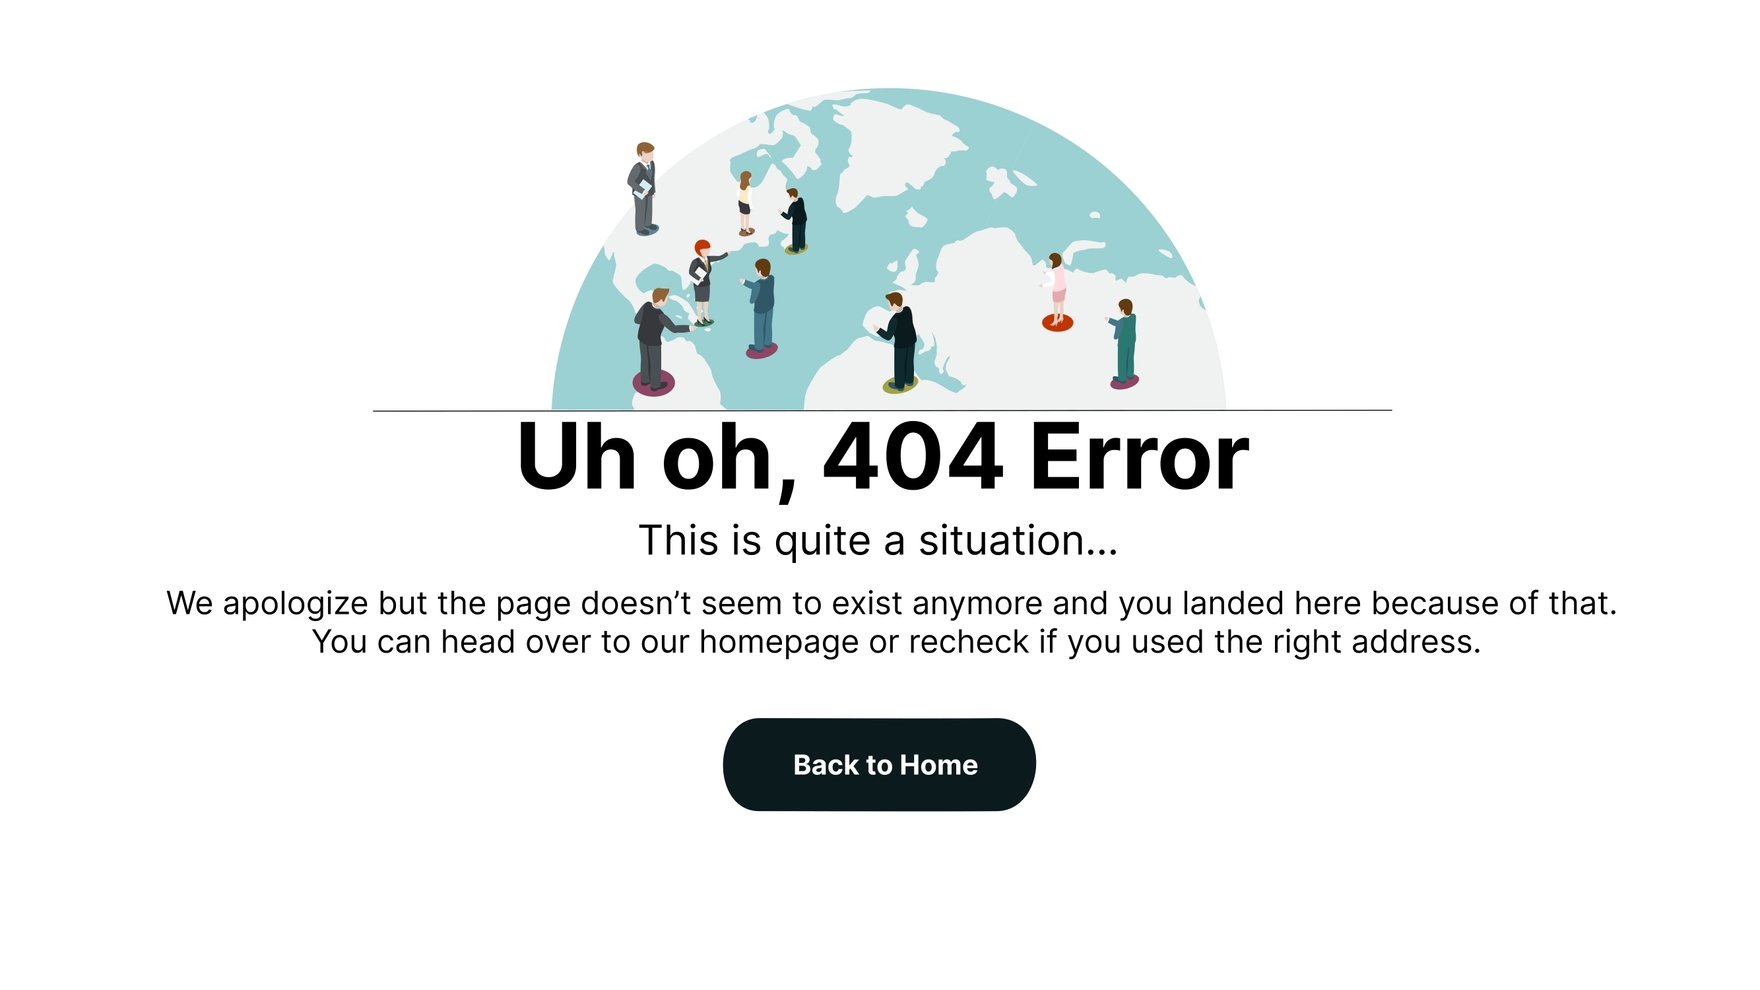 Free 404 Concept Error Page in Adobe XD